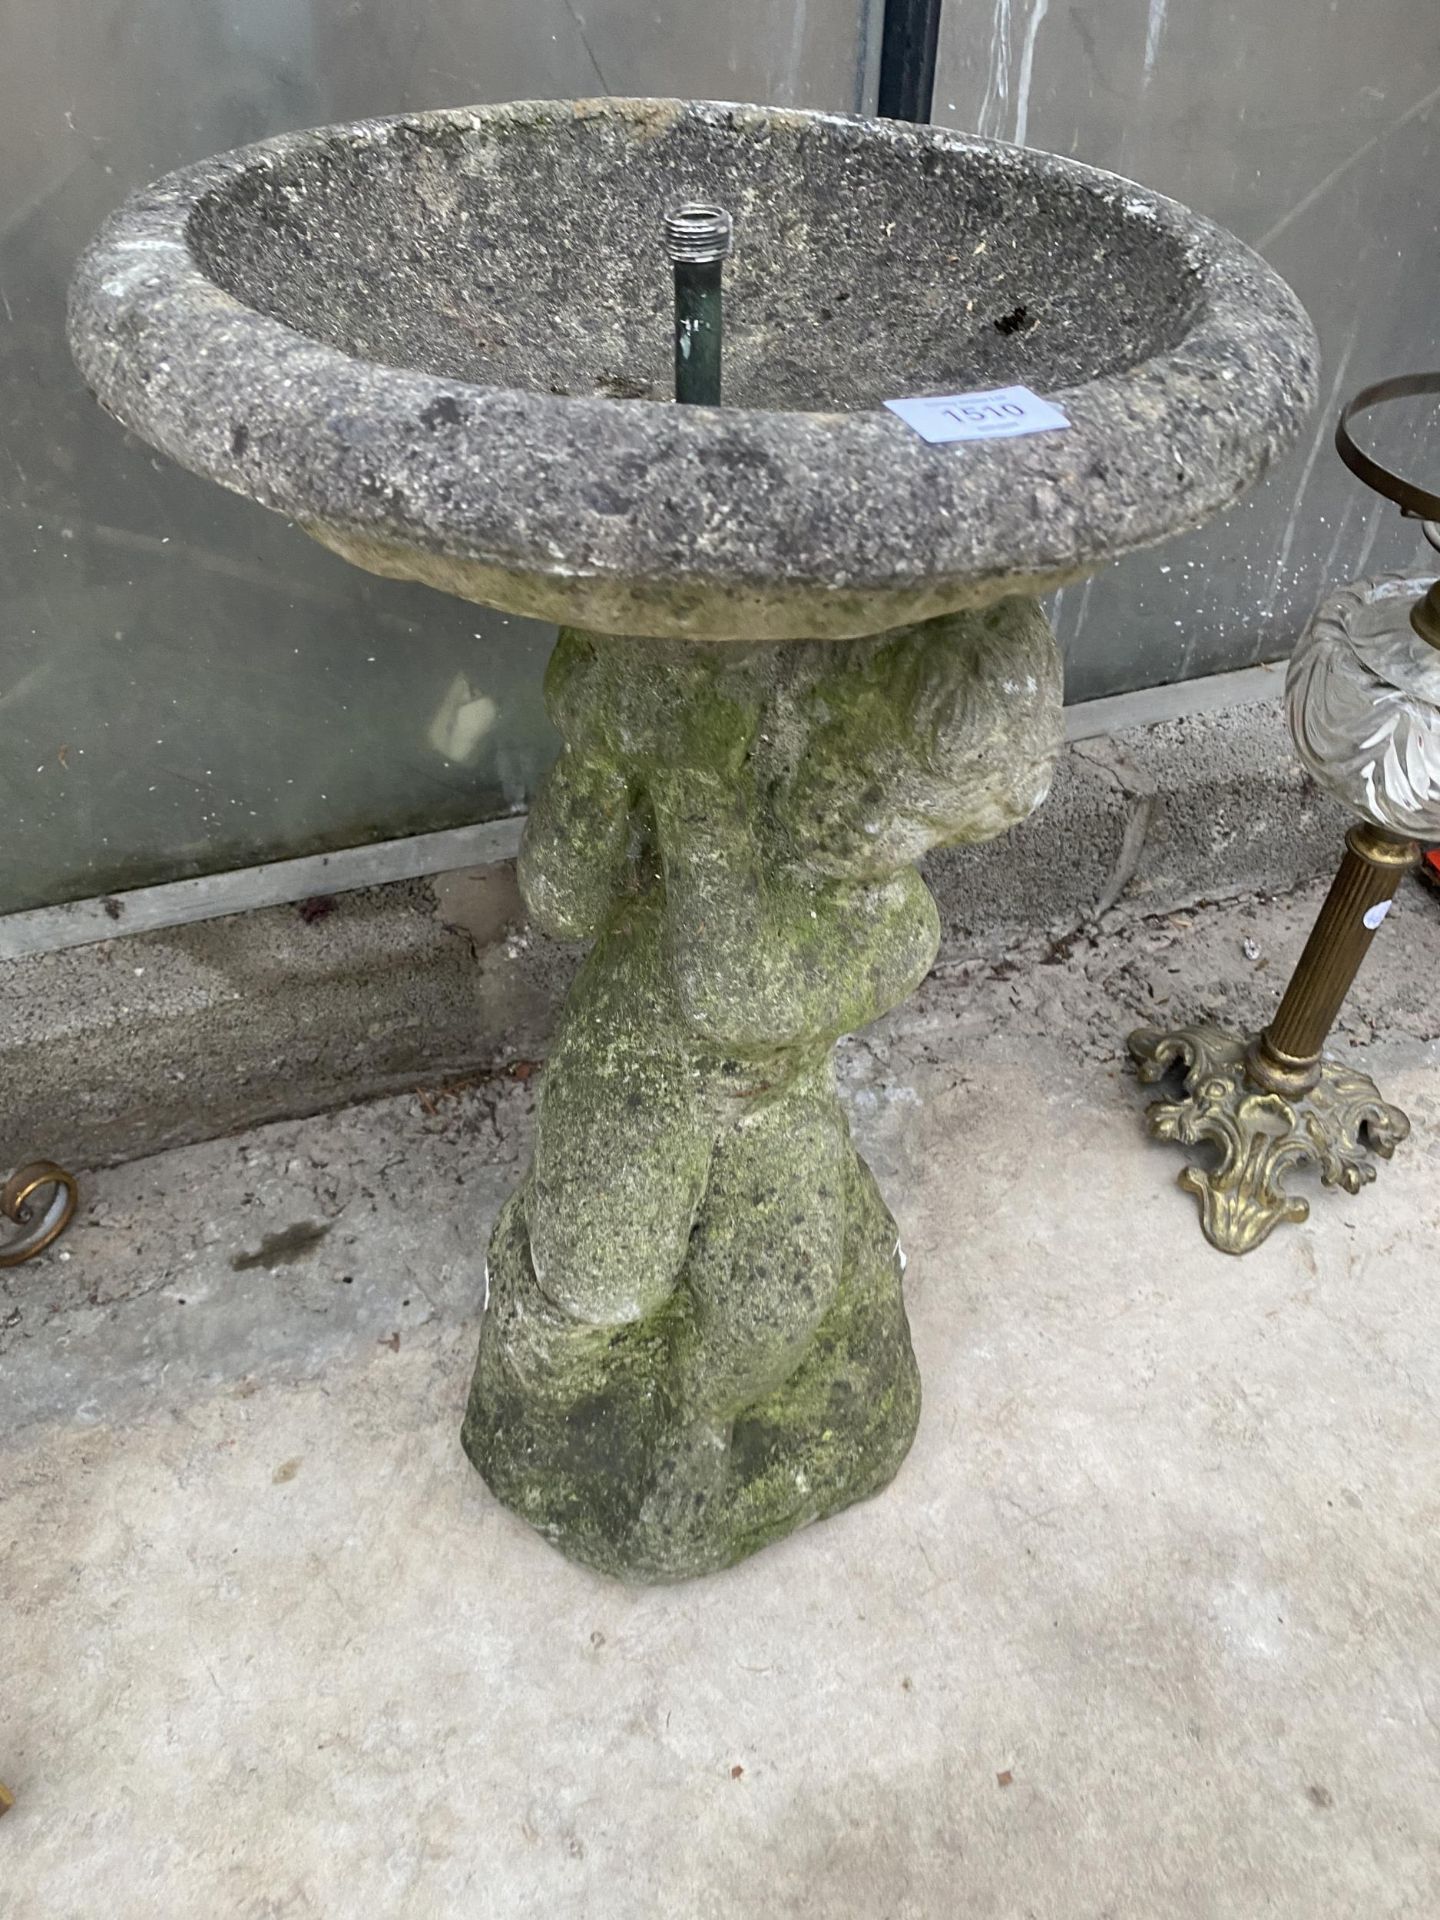 A DECORATIVE CONCRETE BIURD BATH WATER FEATURE WITH CHERUB PEDESTAL BASE - Image 3 of 3